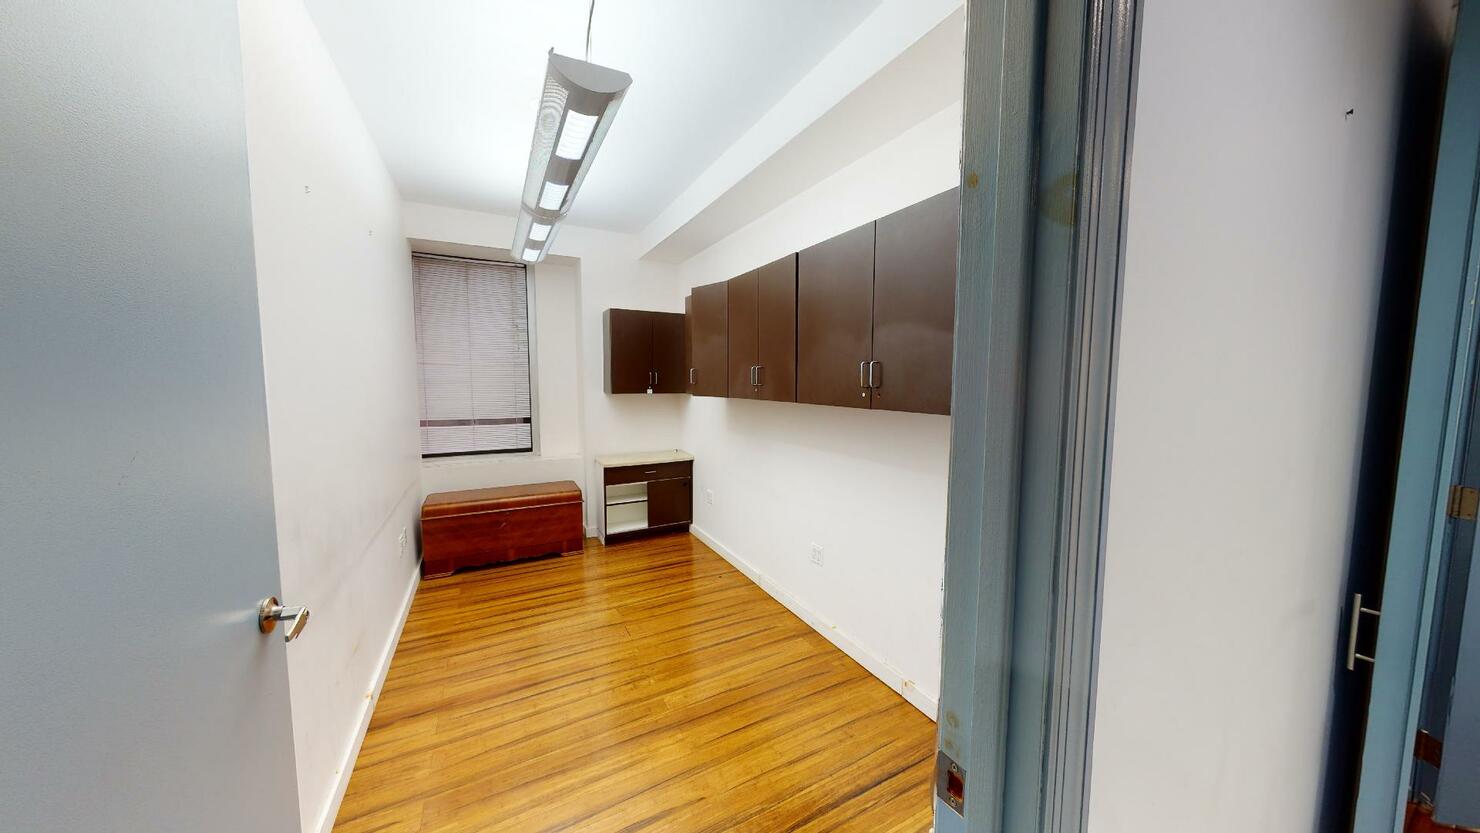 369 Lexington Avenue Office Space, #8B - Treatment Room with Shelving